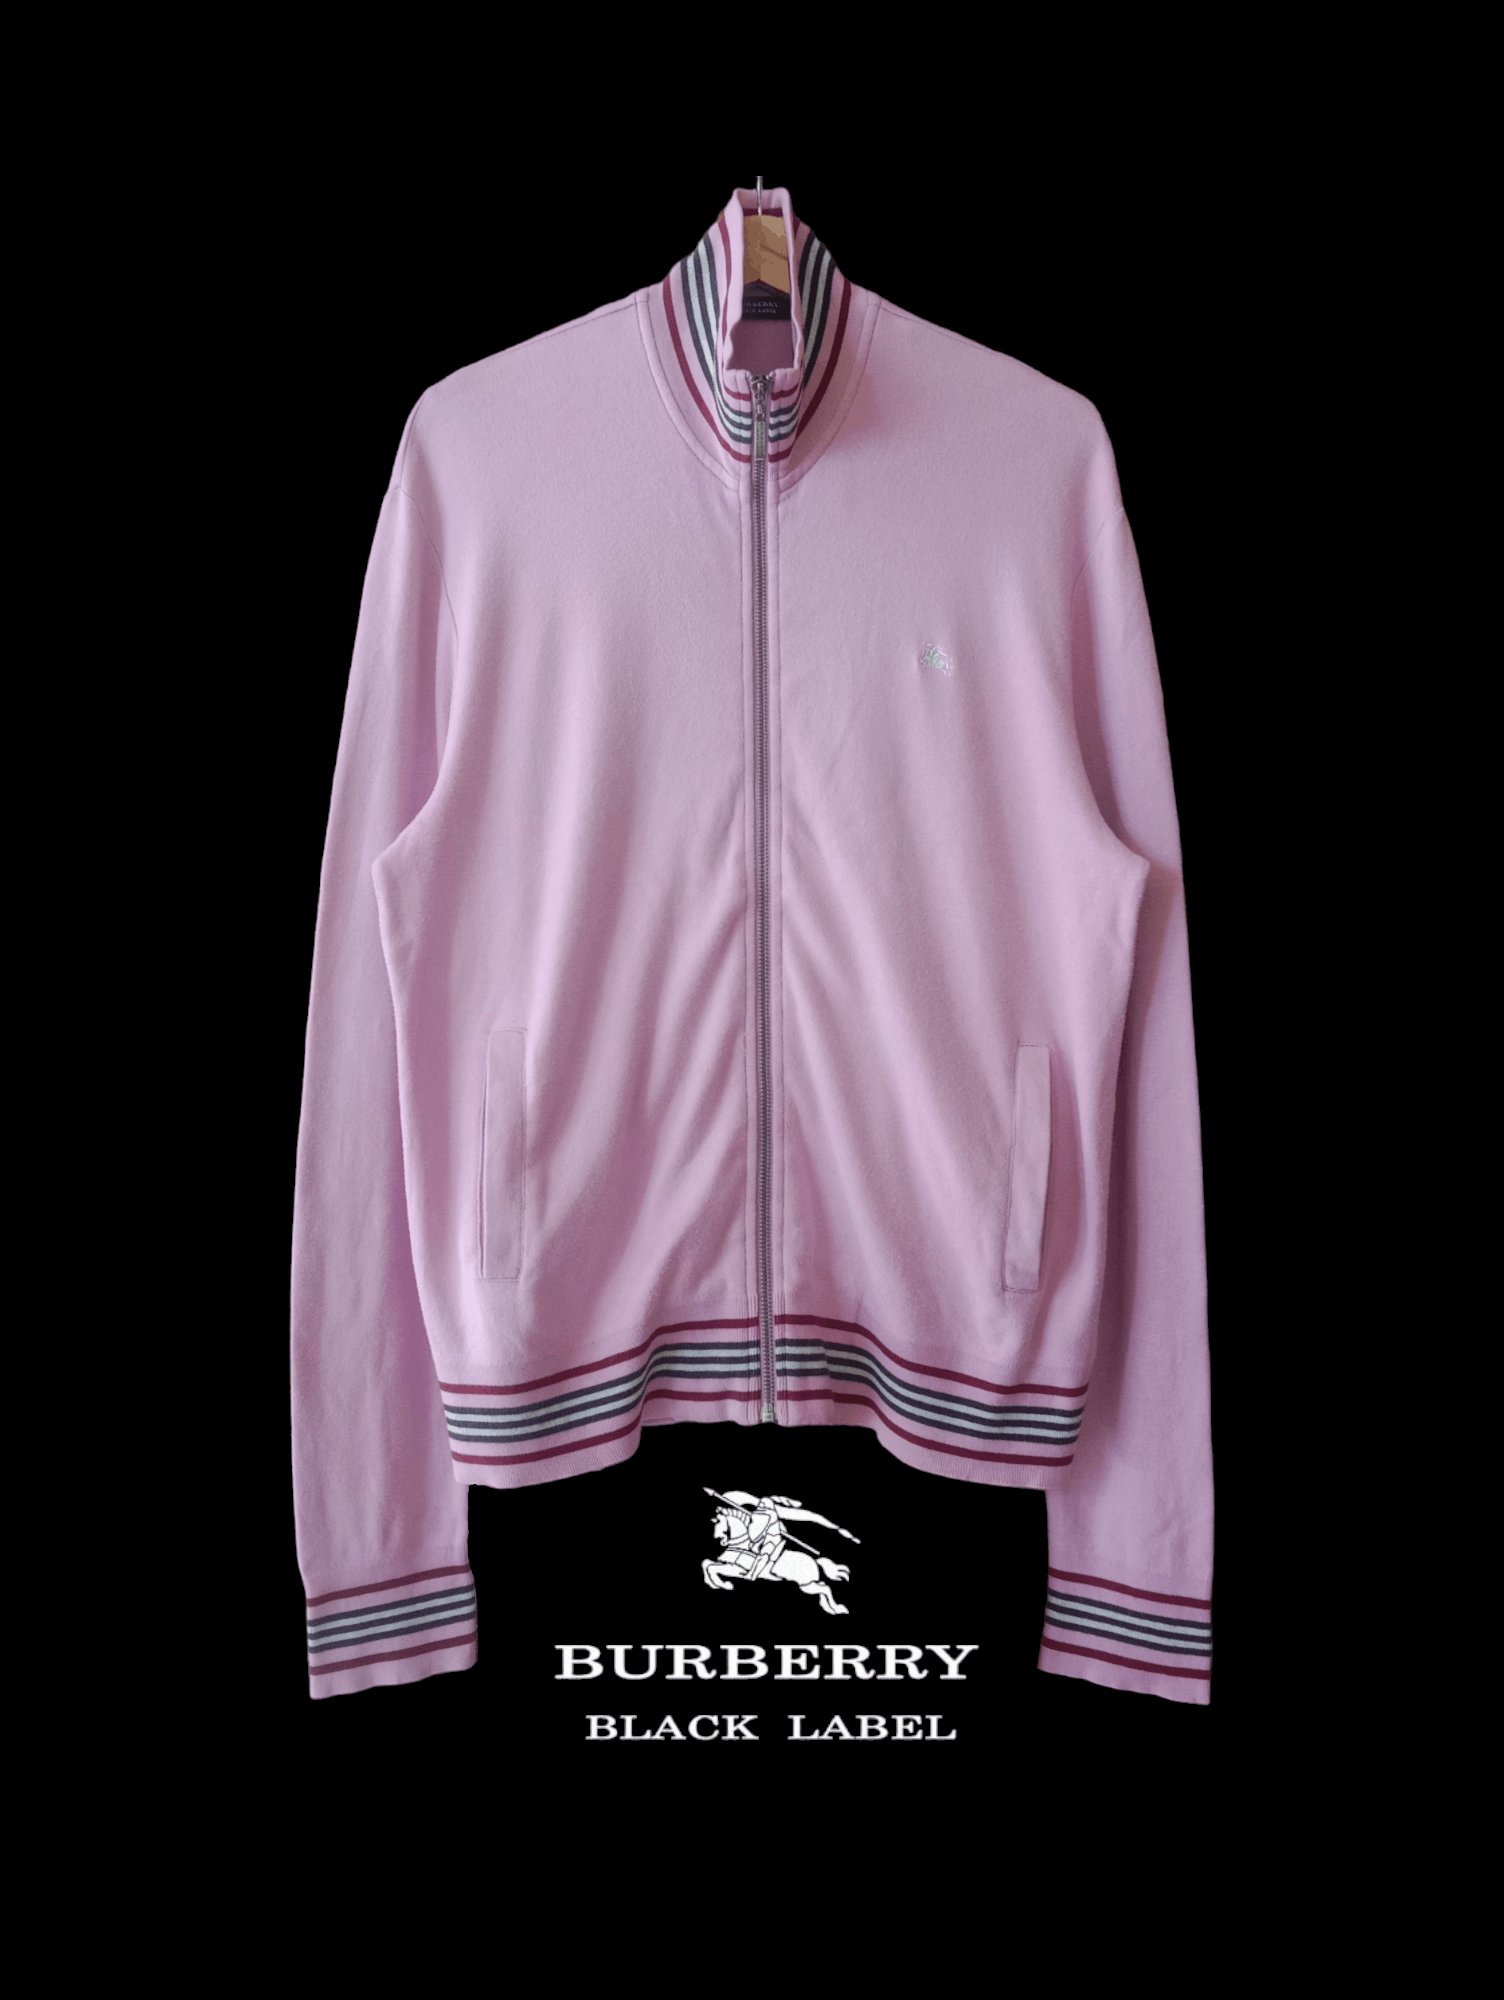 Burberry Burberry Black Label Jacket Sweater Zip Up | Grailed